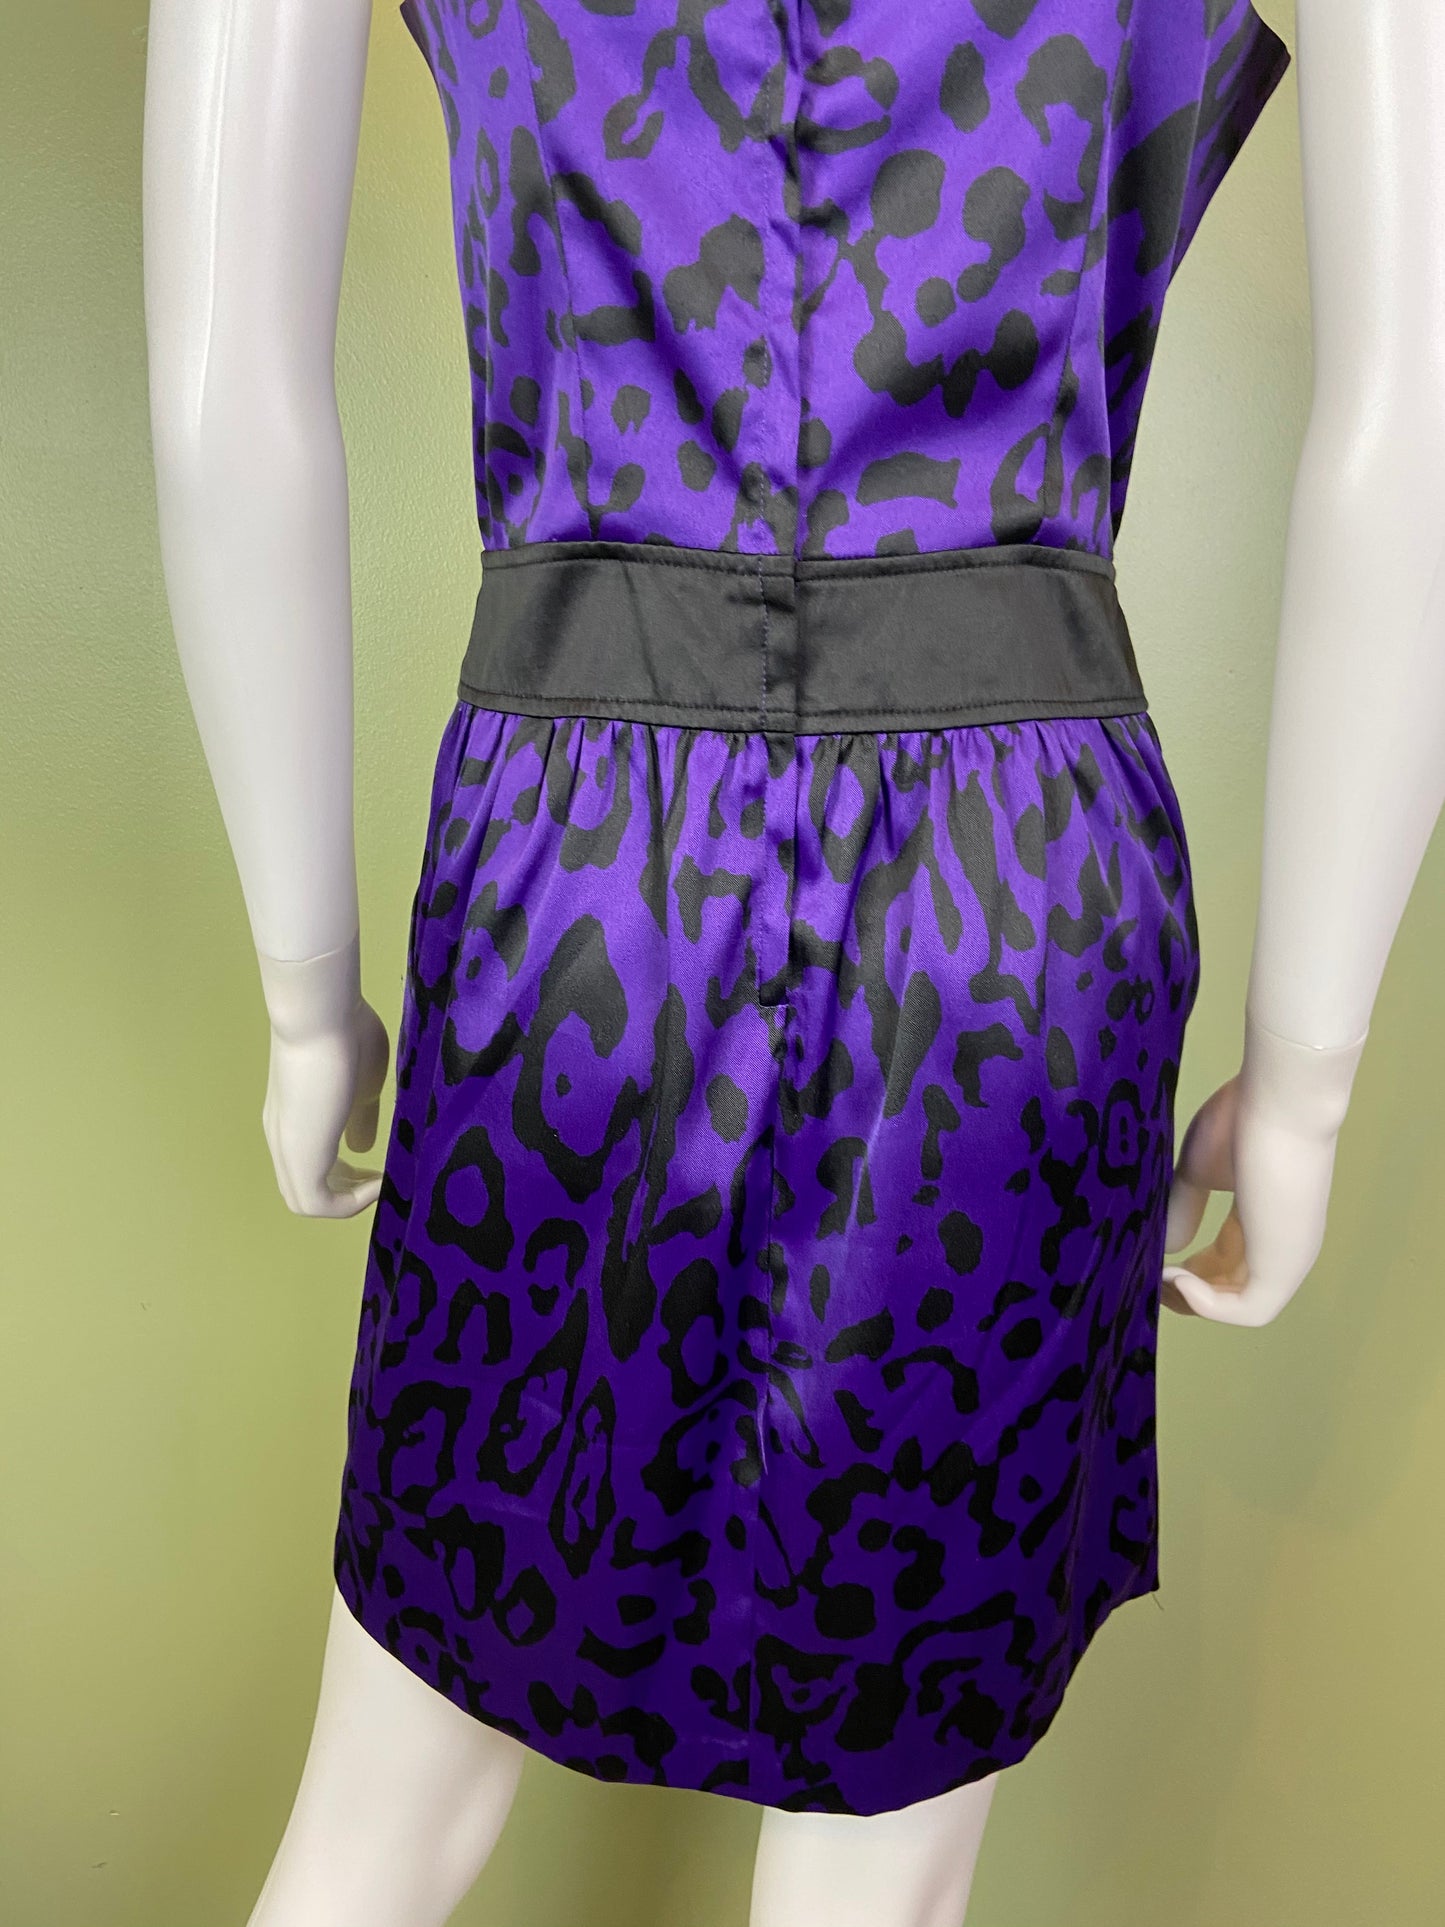 Purple Satin Bustier Cocktail Dress